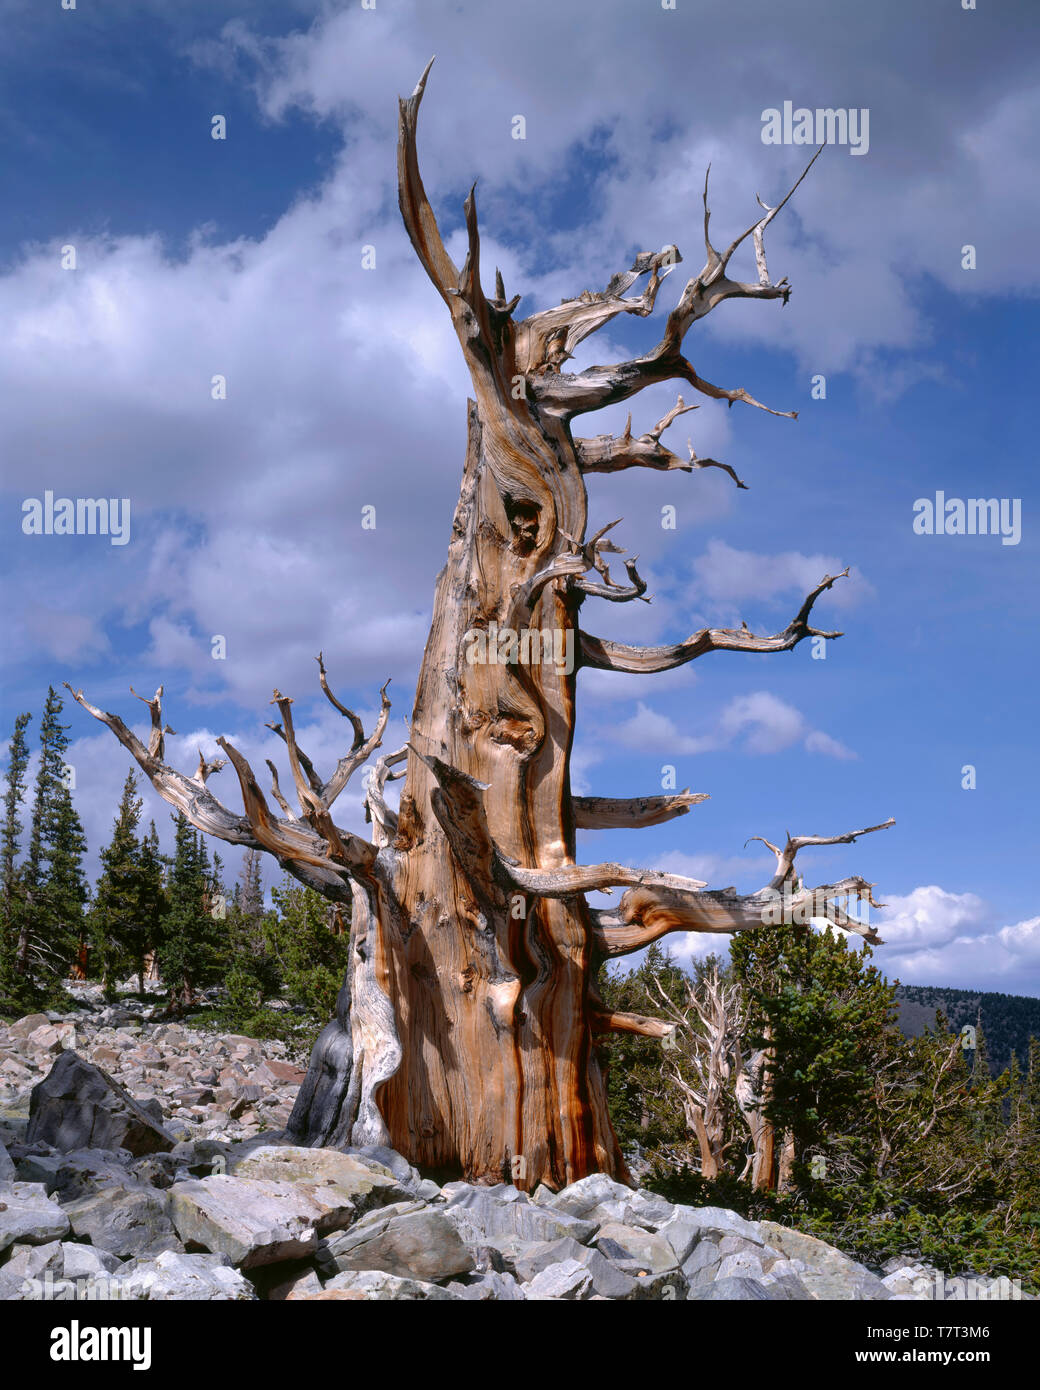 USA, Nevada, Great Basin National Park, Ancient bristlecone pine tree (Pinus longaeva) growing alongside quartzite boulders. Stock Photo